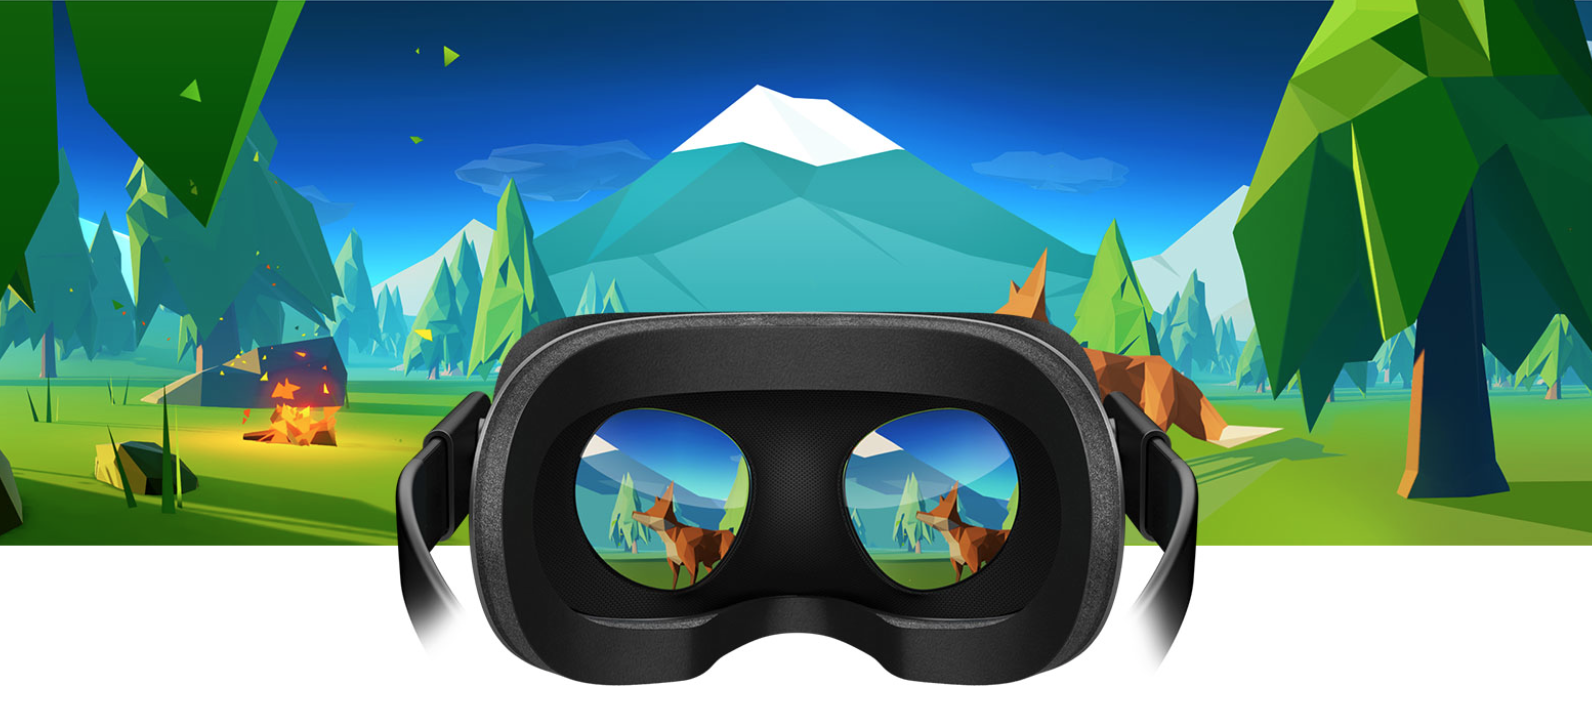 oculus-rift-realidade-virtual-capa-02a